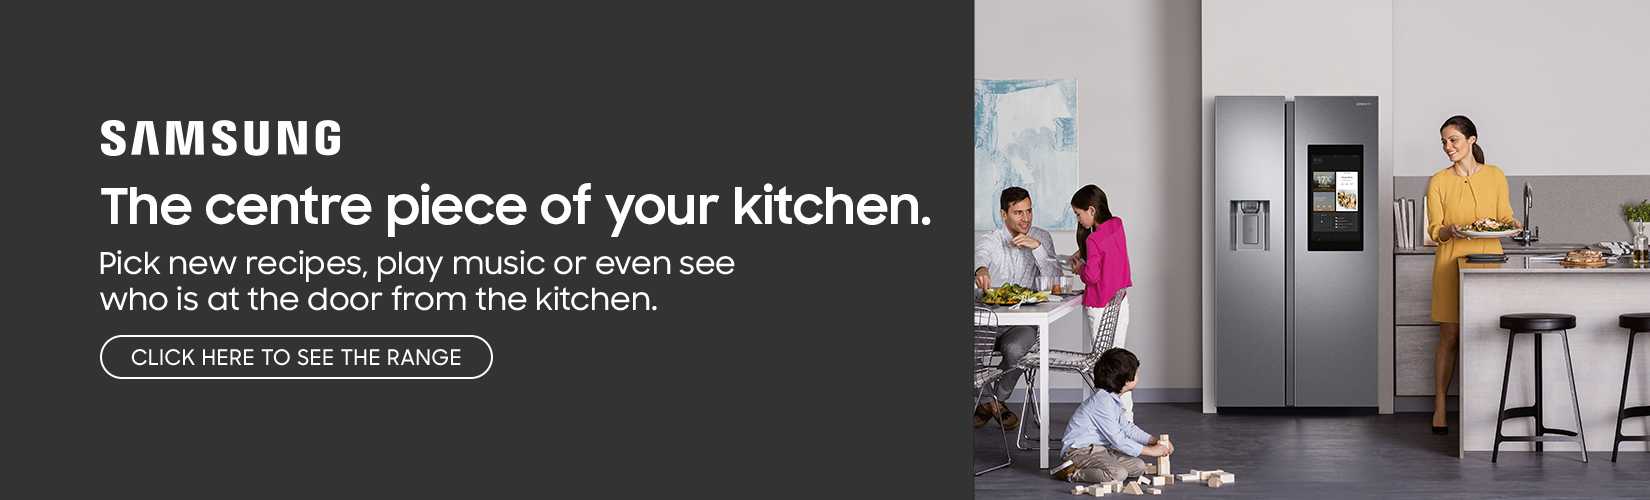 Samsung. The center piece of your kitchen.